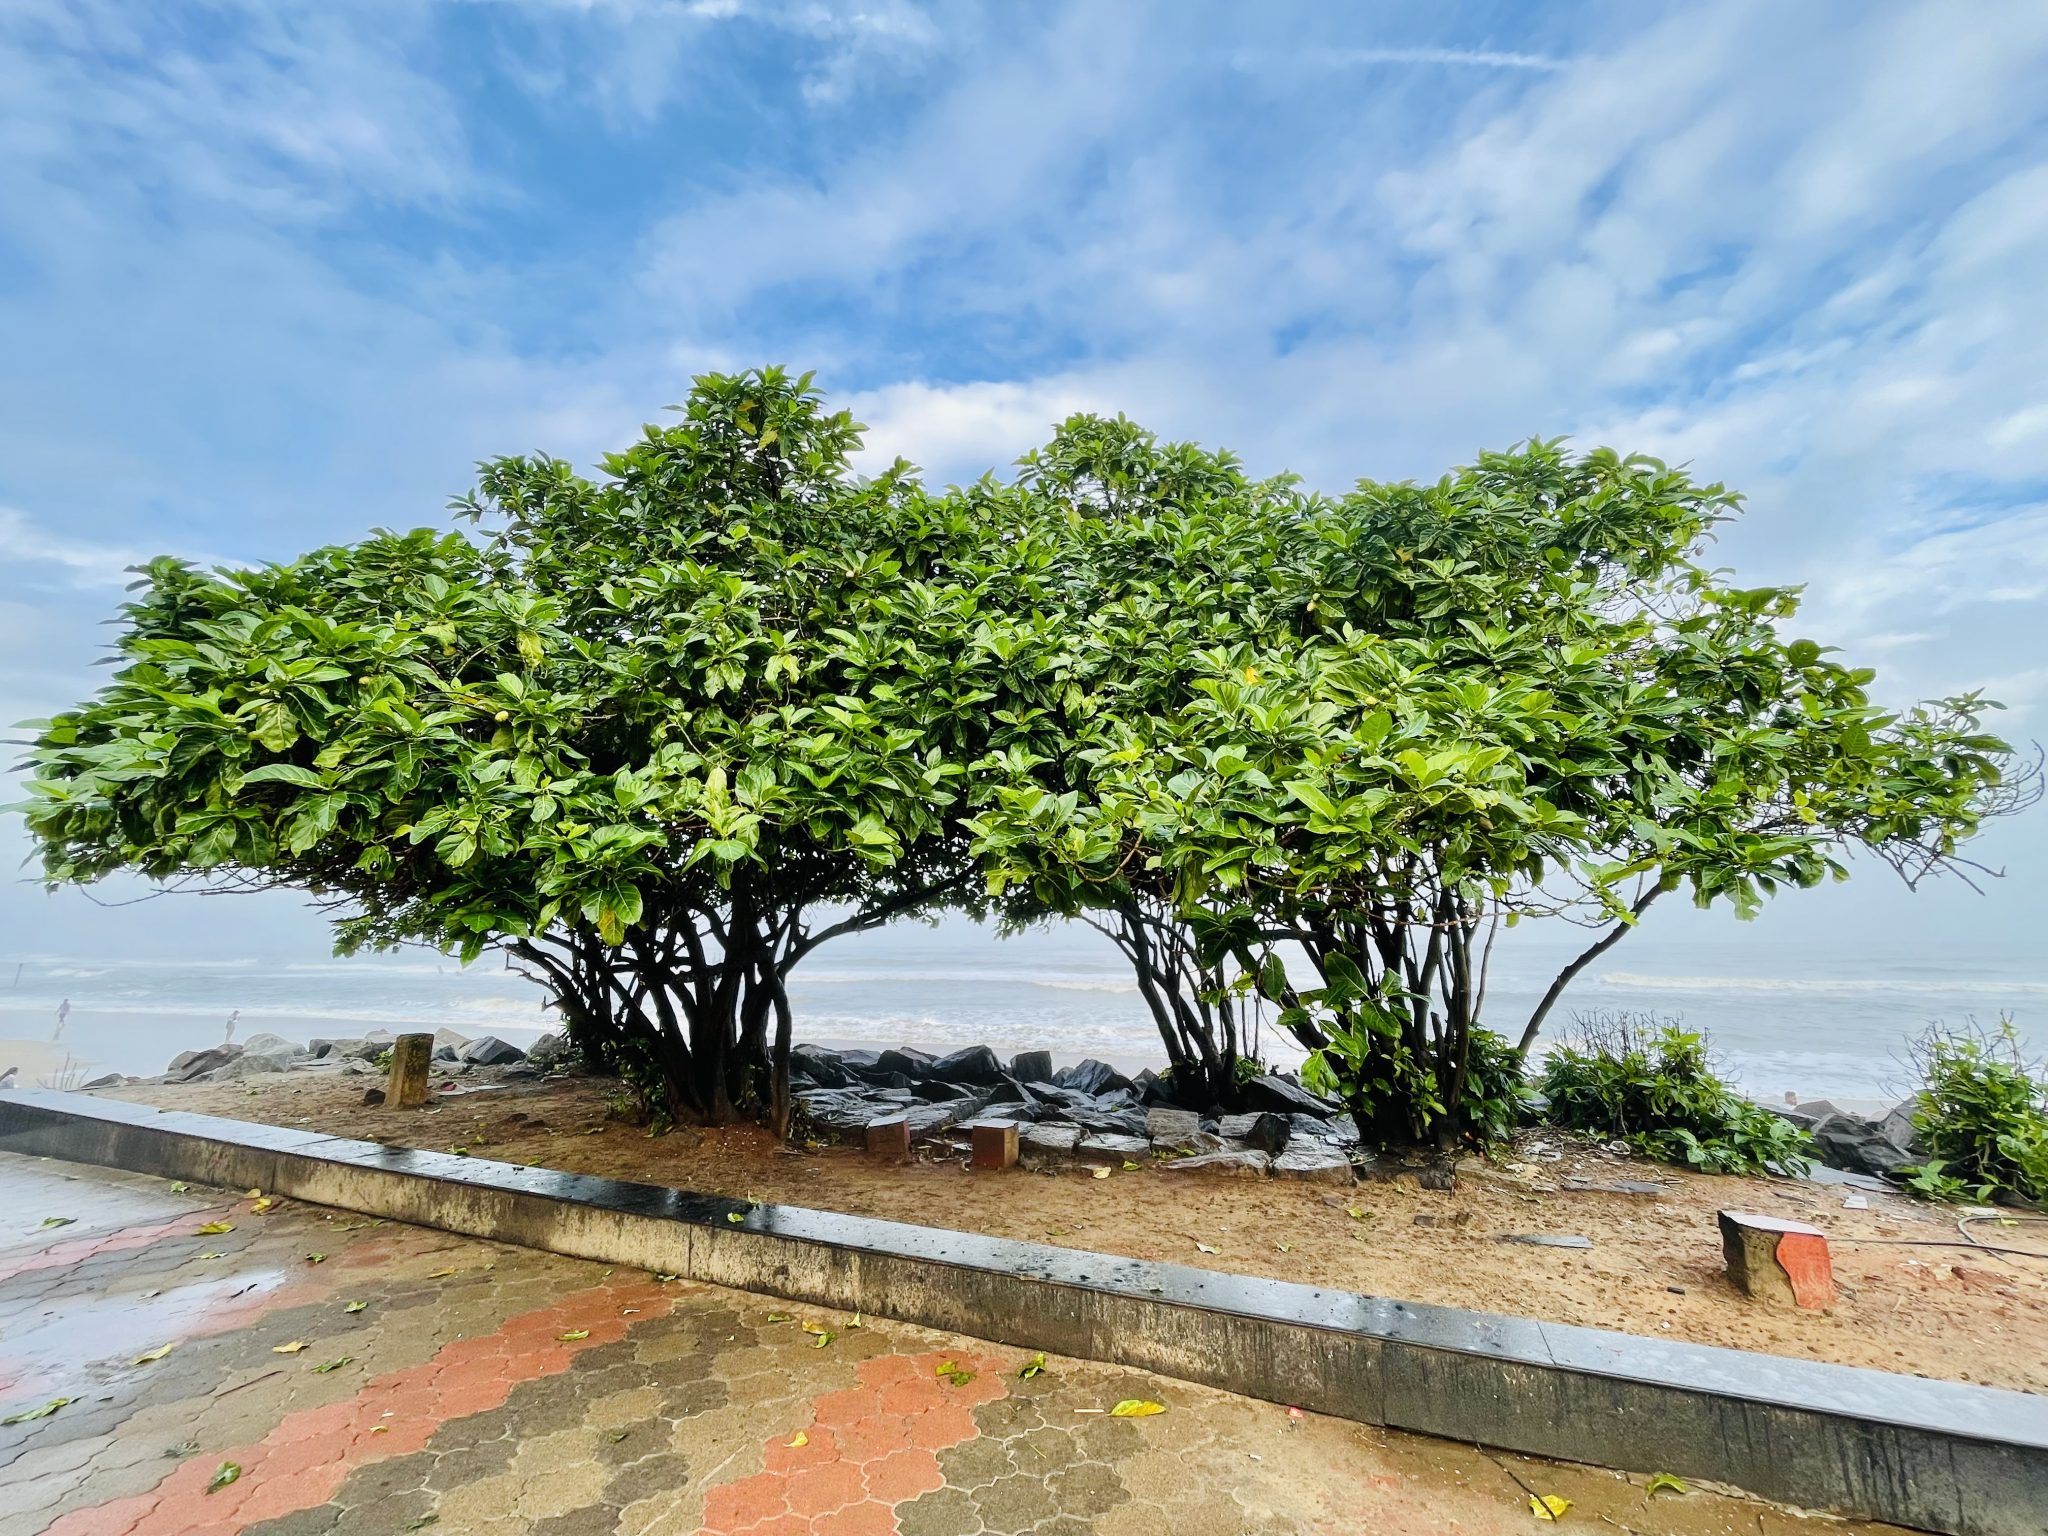 Twin trees of Kozhikode beach. From Kerala, India.